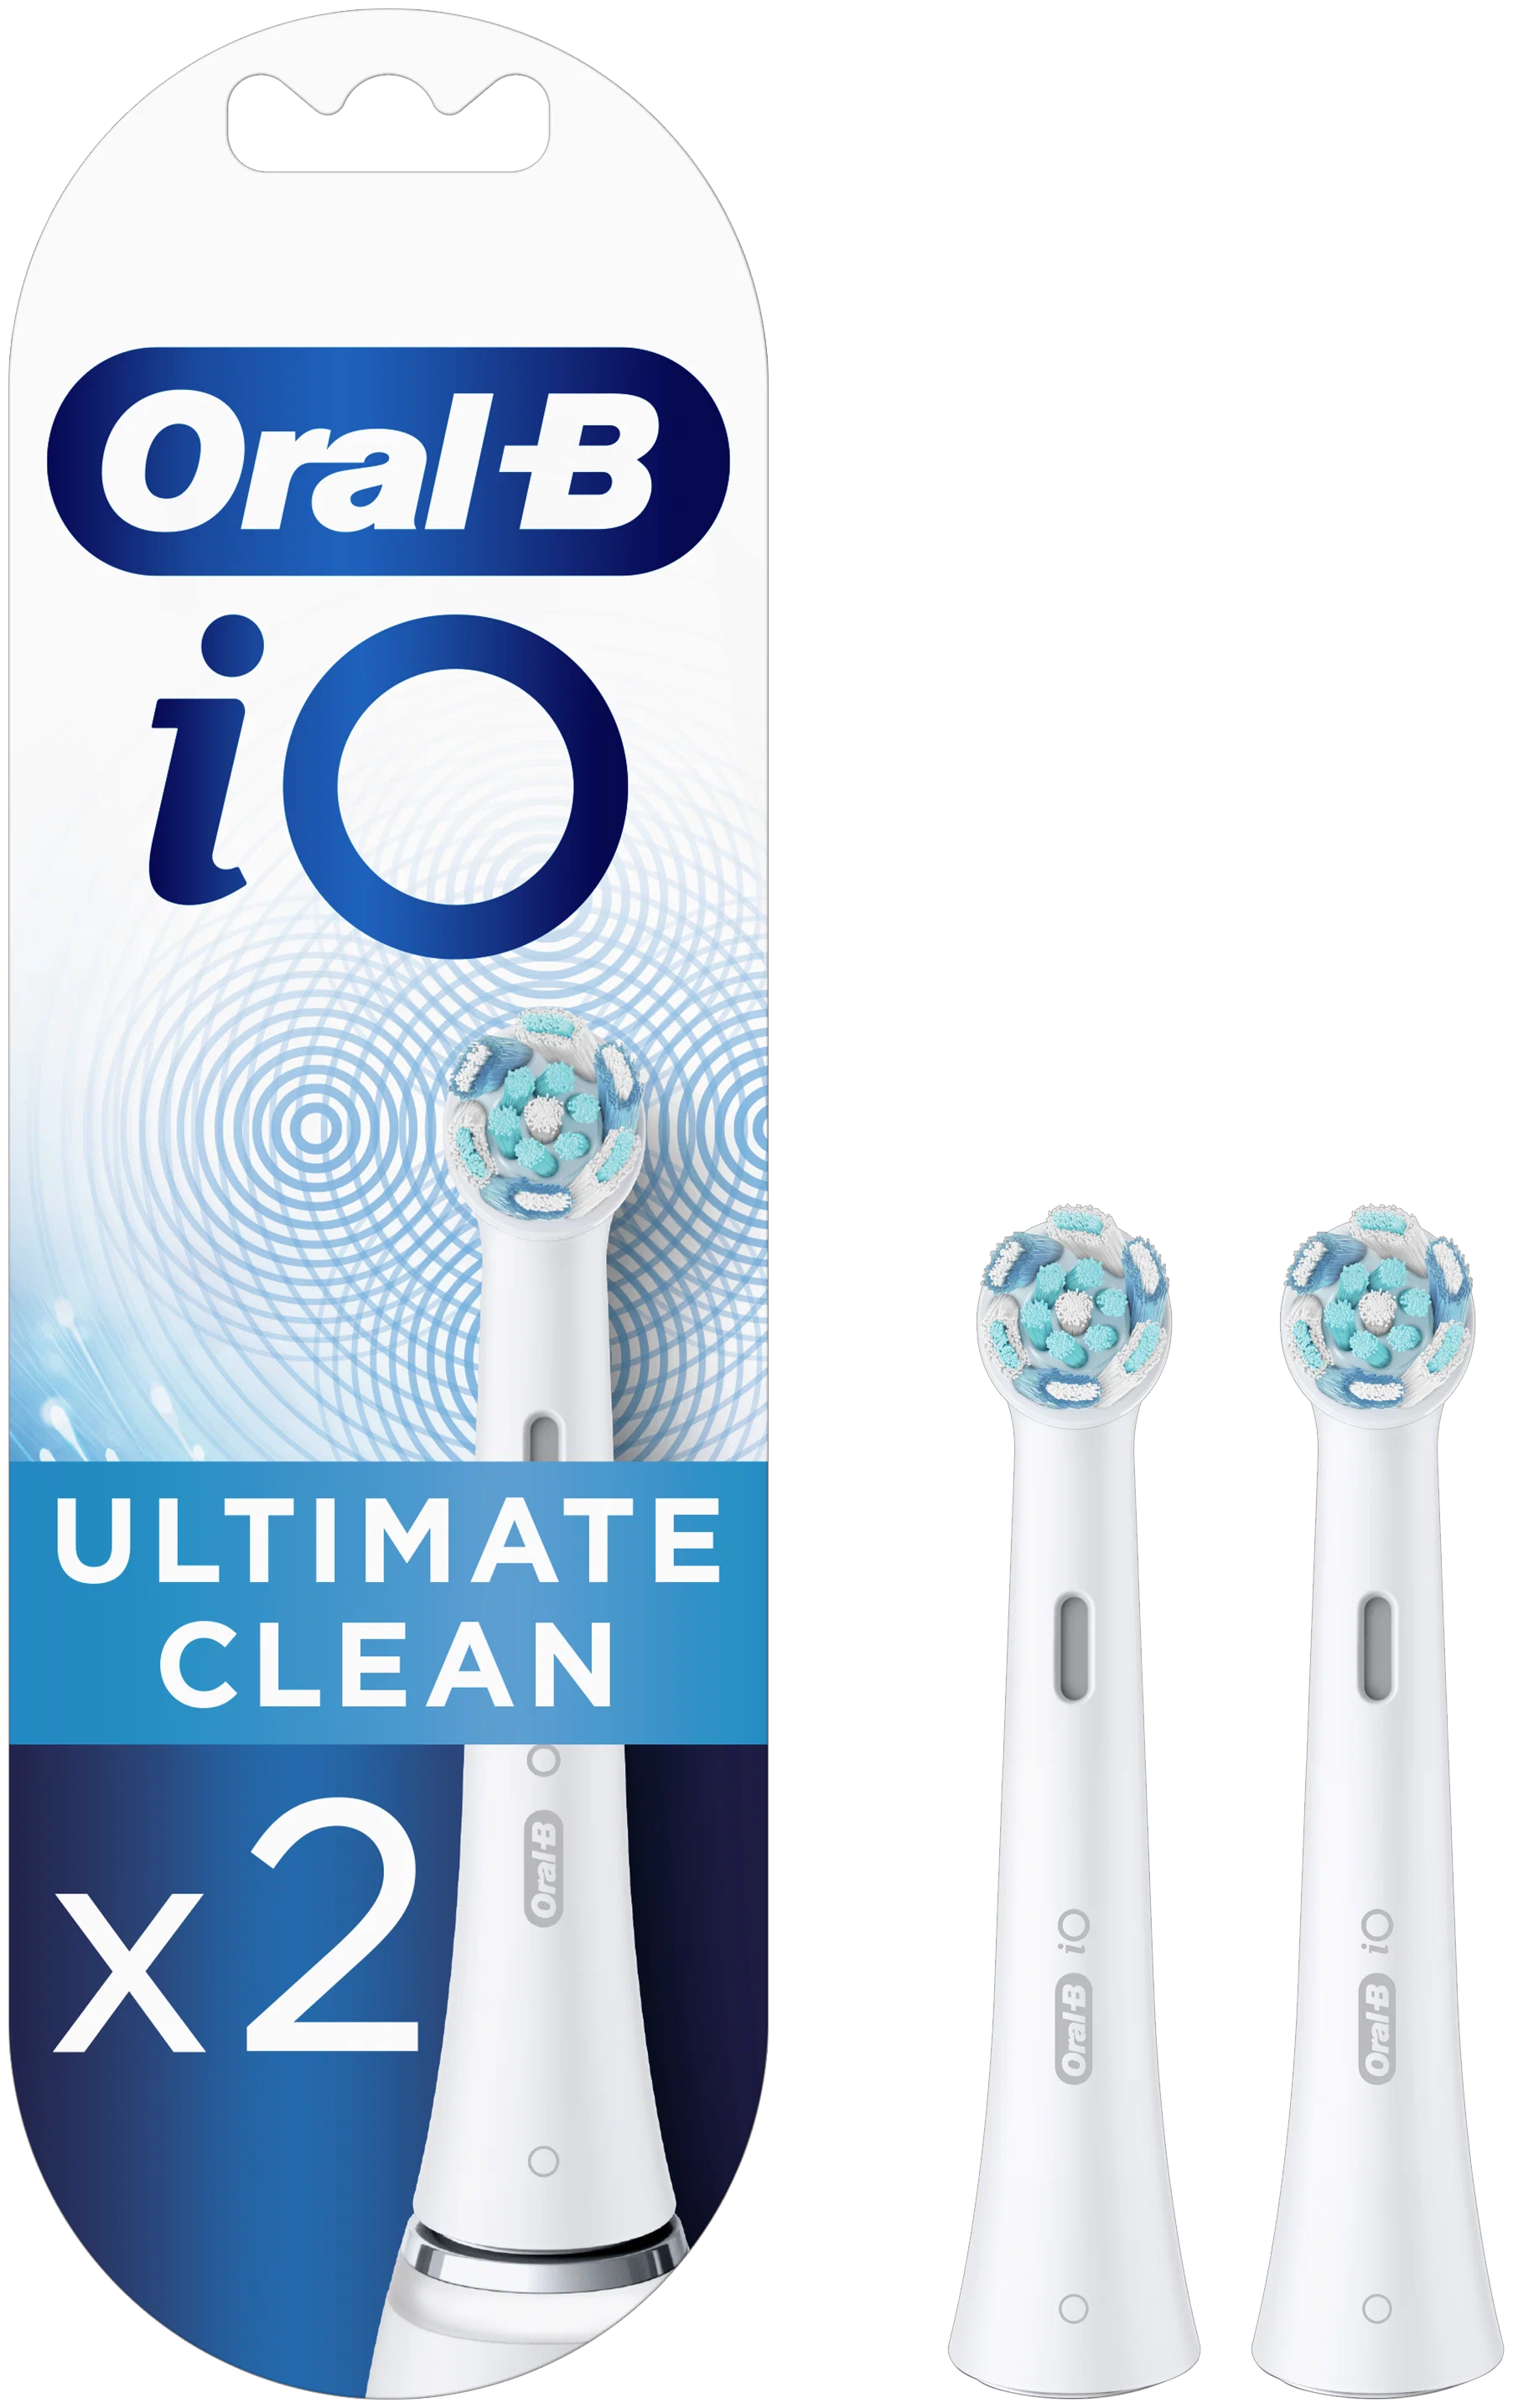 Oral-B Набор насадок iO RB Ultimate Clean для электрической щетки, 2 шт.